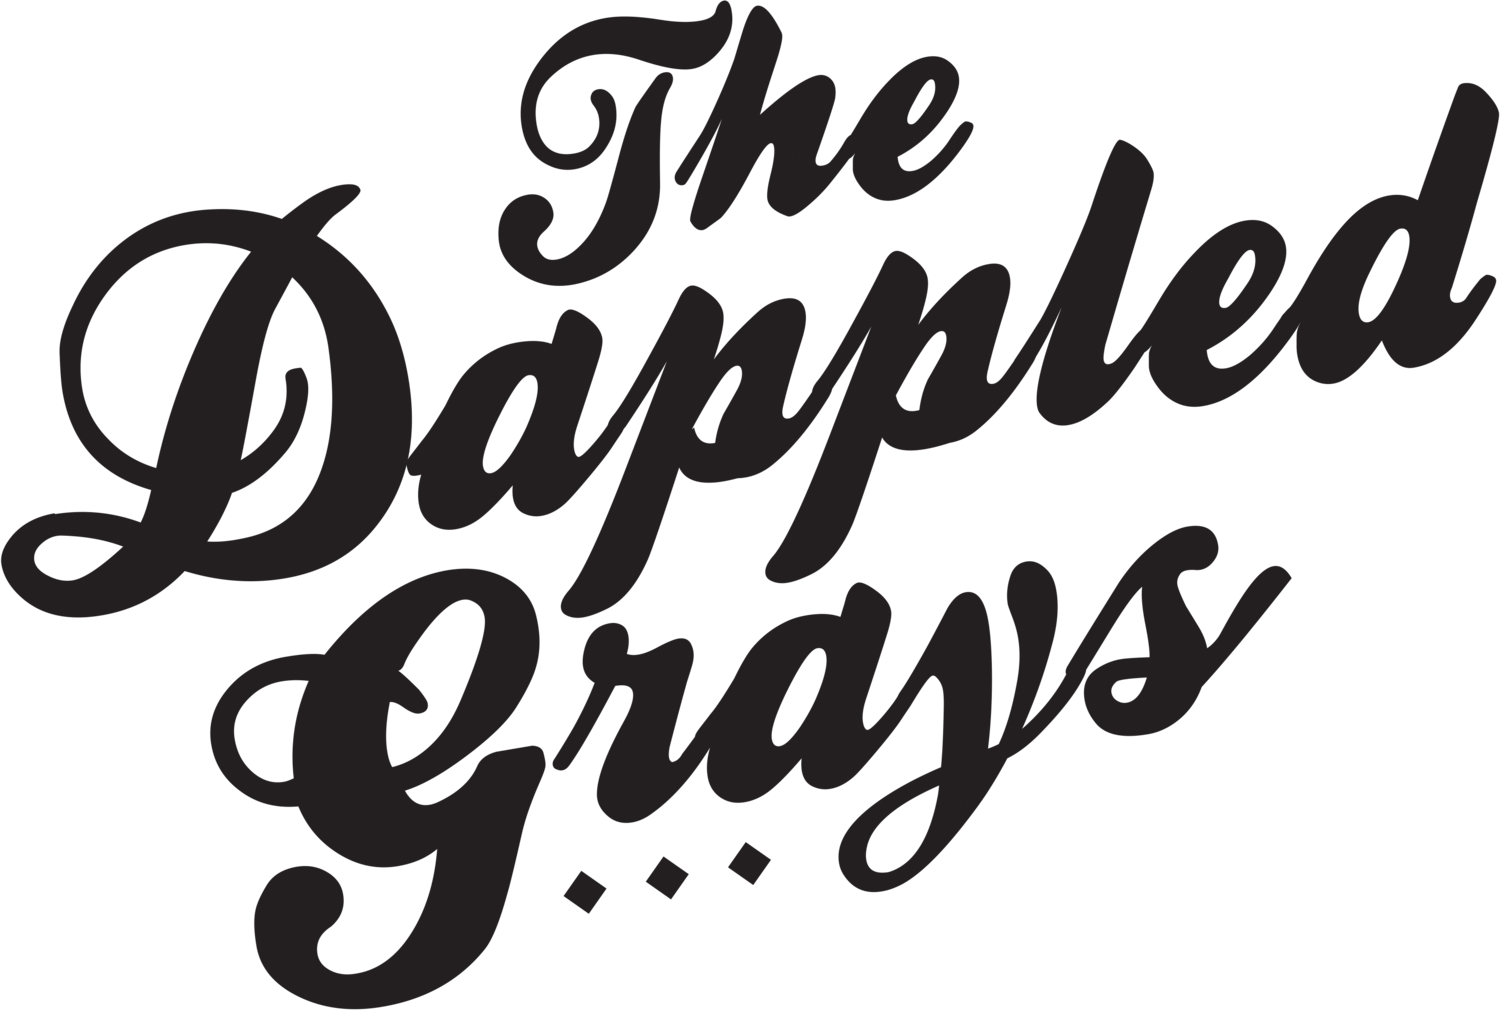 The Dappled Grays